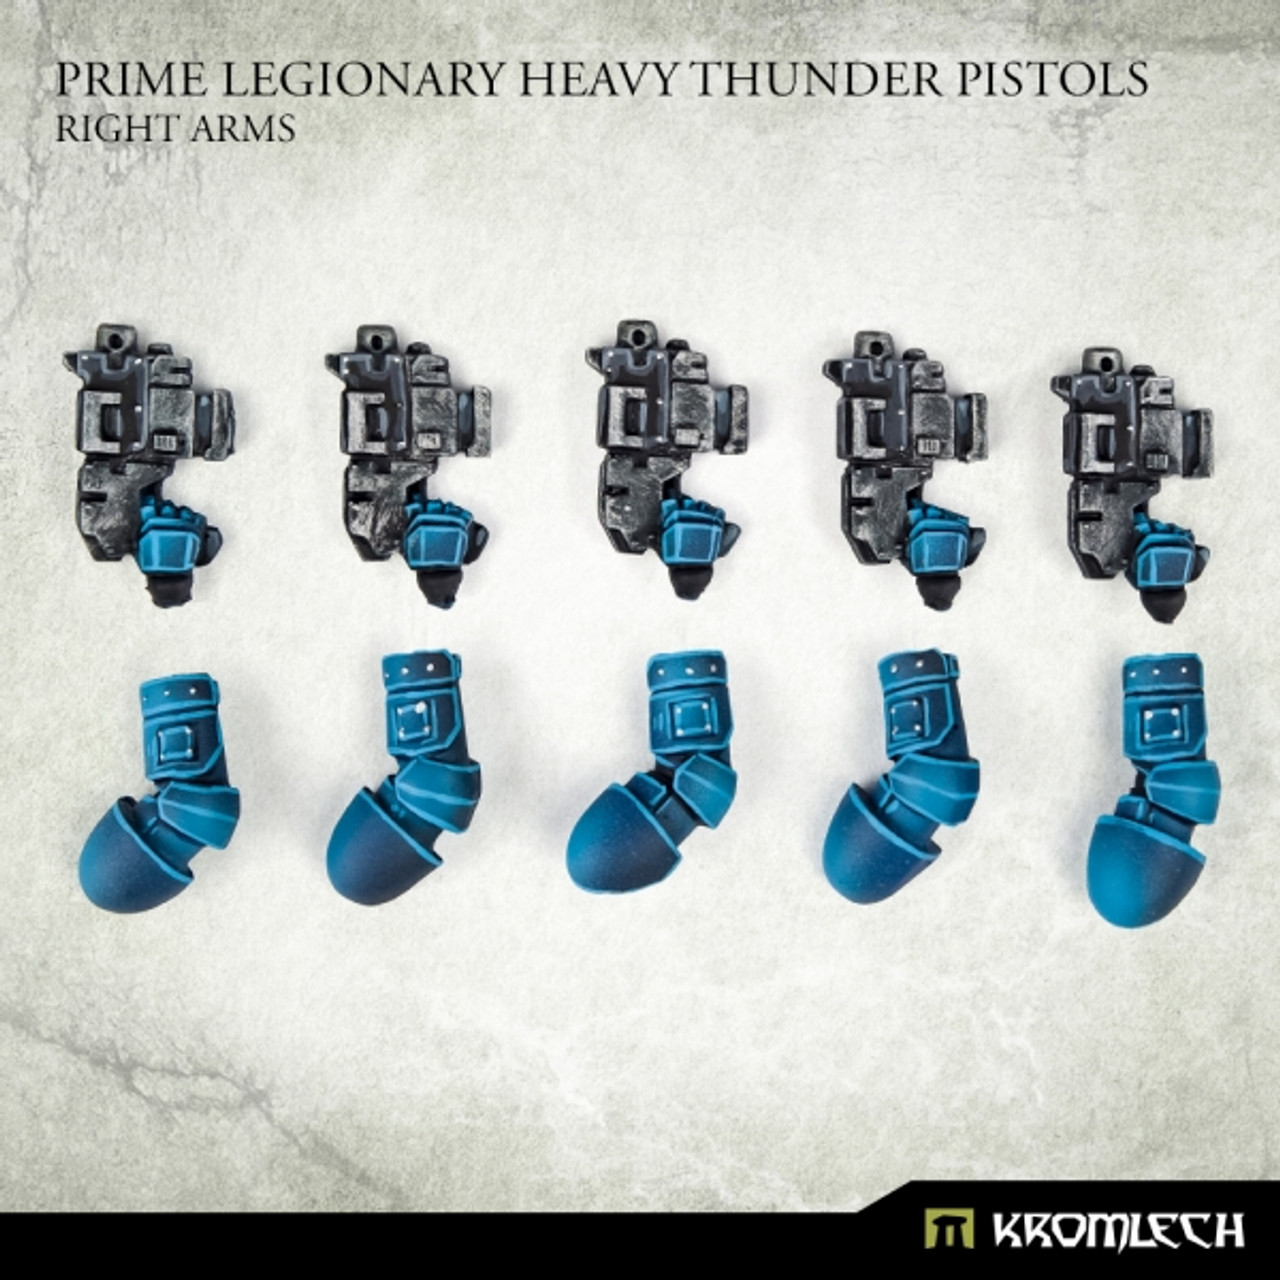 Prime Legionaries CCW Arms: Heavy Thunder Pistols [right] (5) - KRCB276